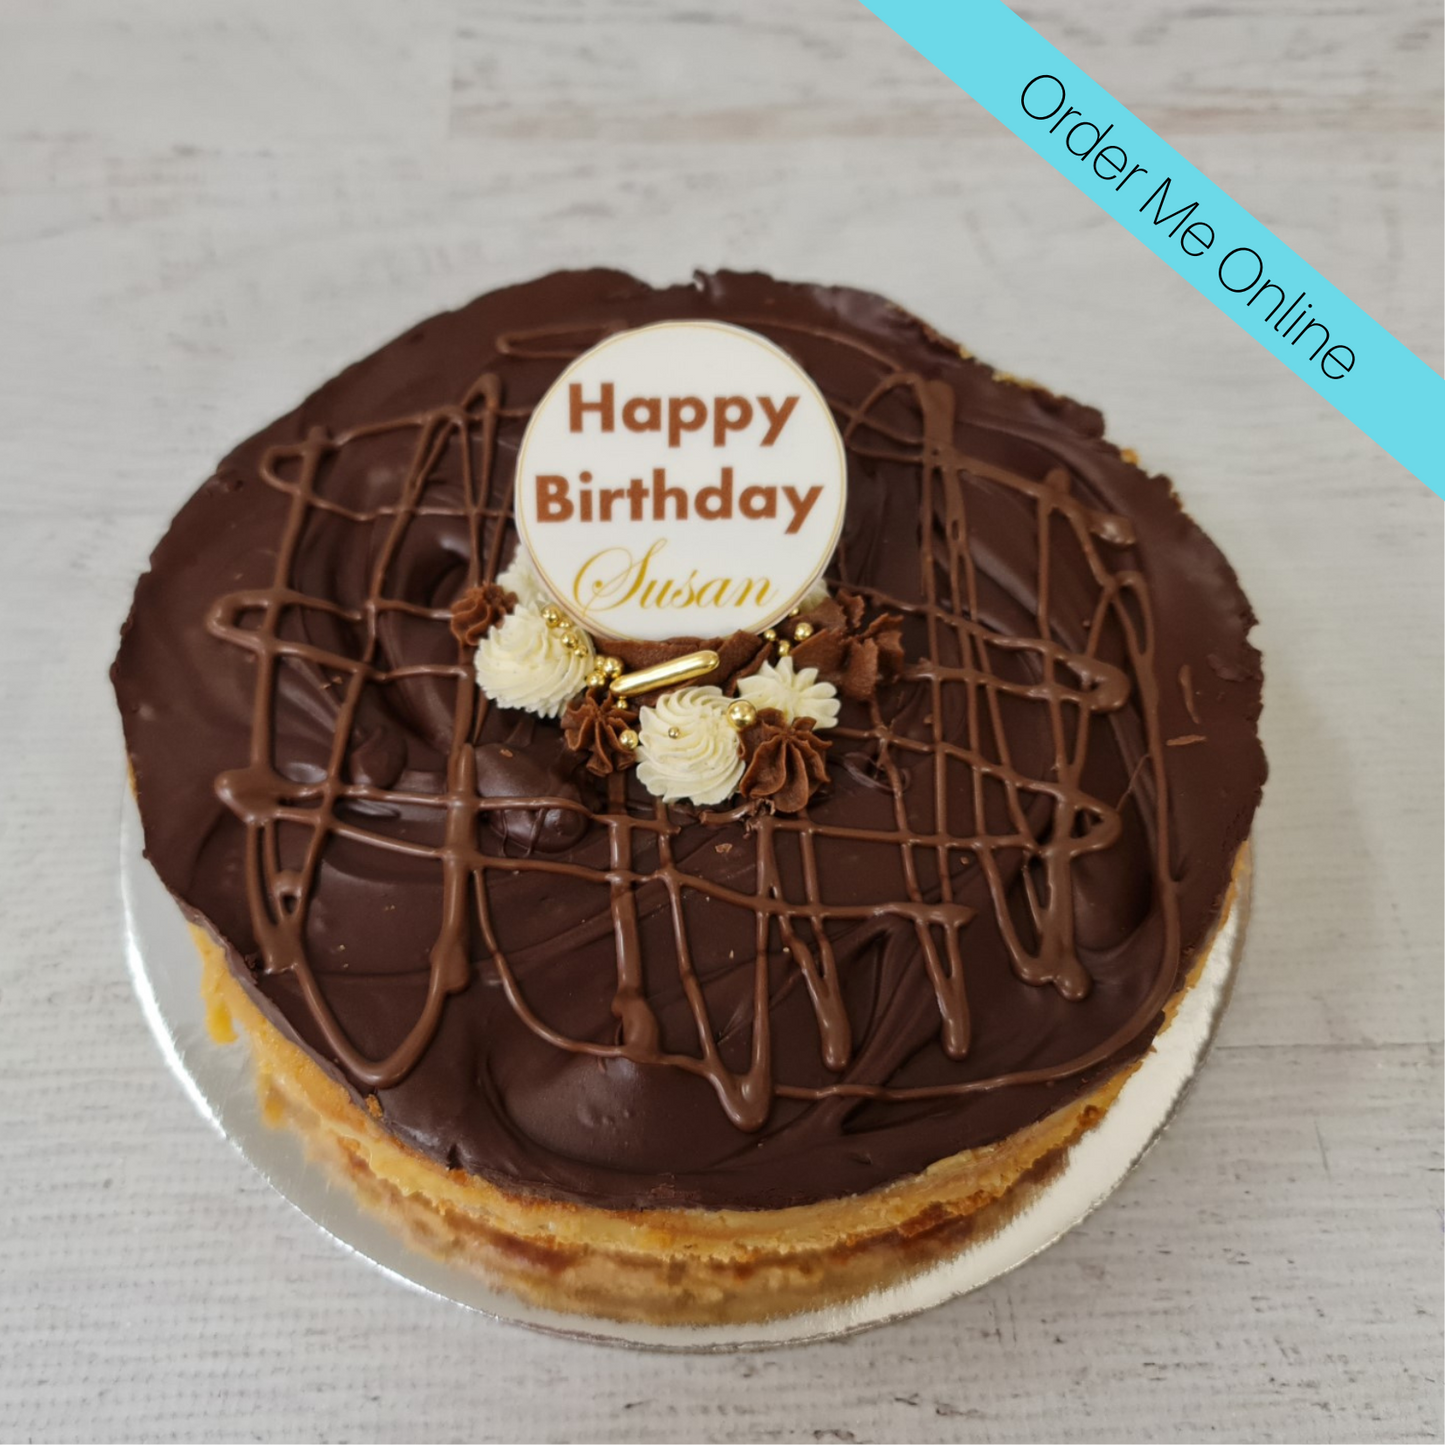 Chocolate and Hokey Pokey Brownie Cake - The Cake Eating Company NZ